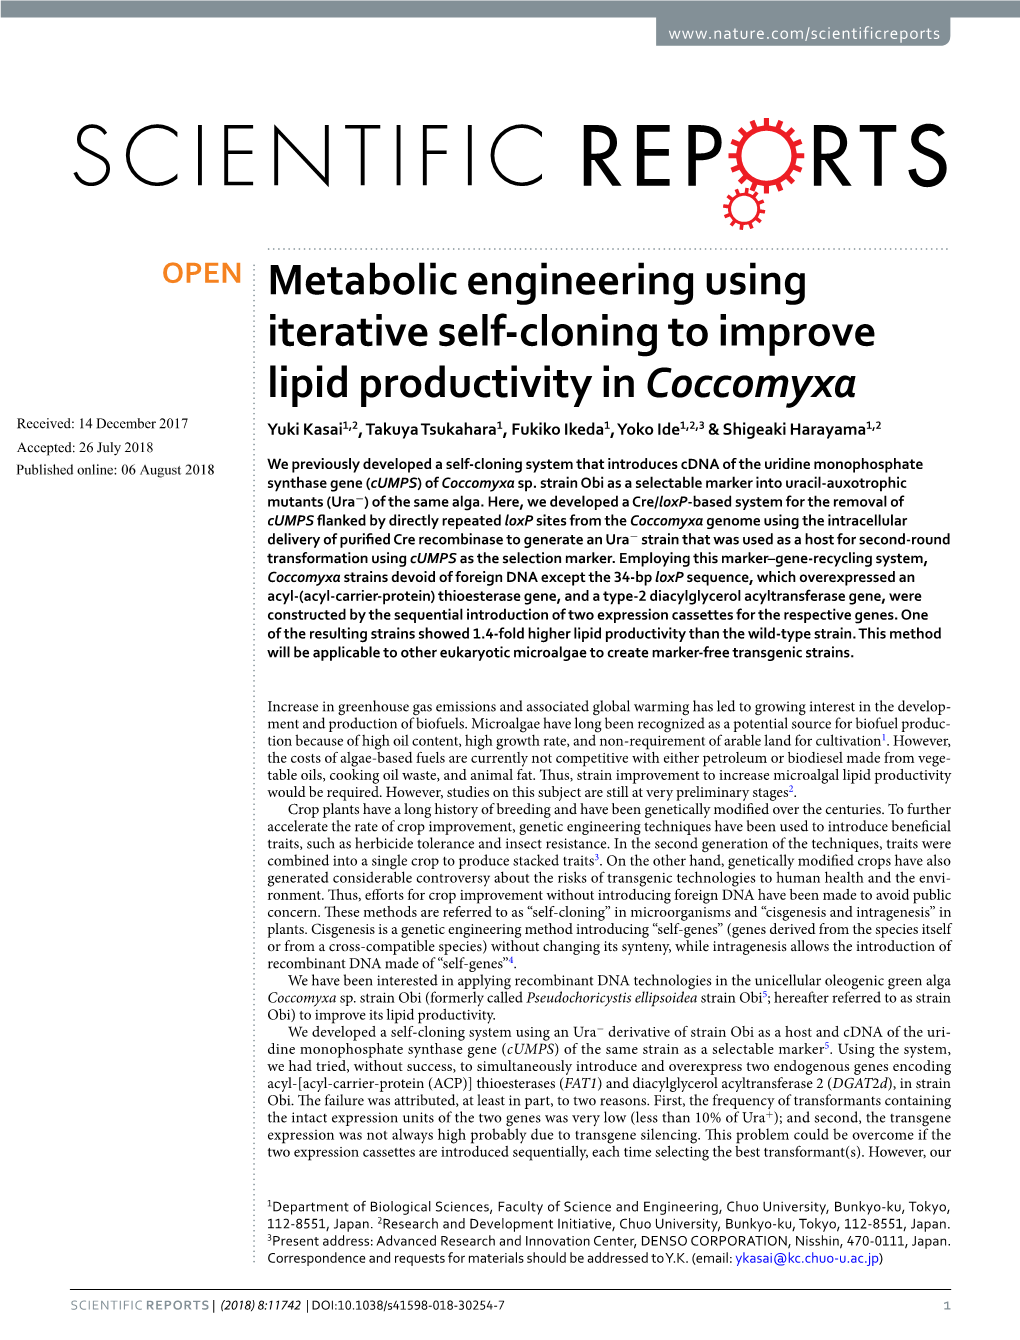 Metabolic Engineering Using Iterative Self-Cloning to Improve Lipid